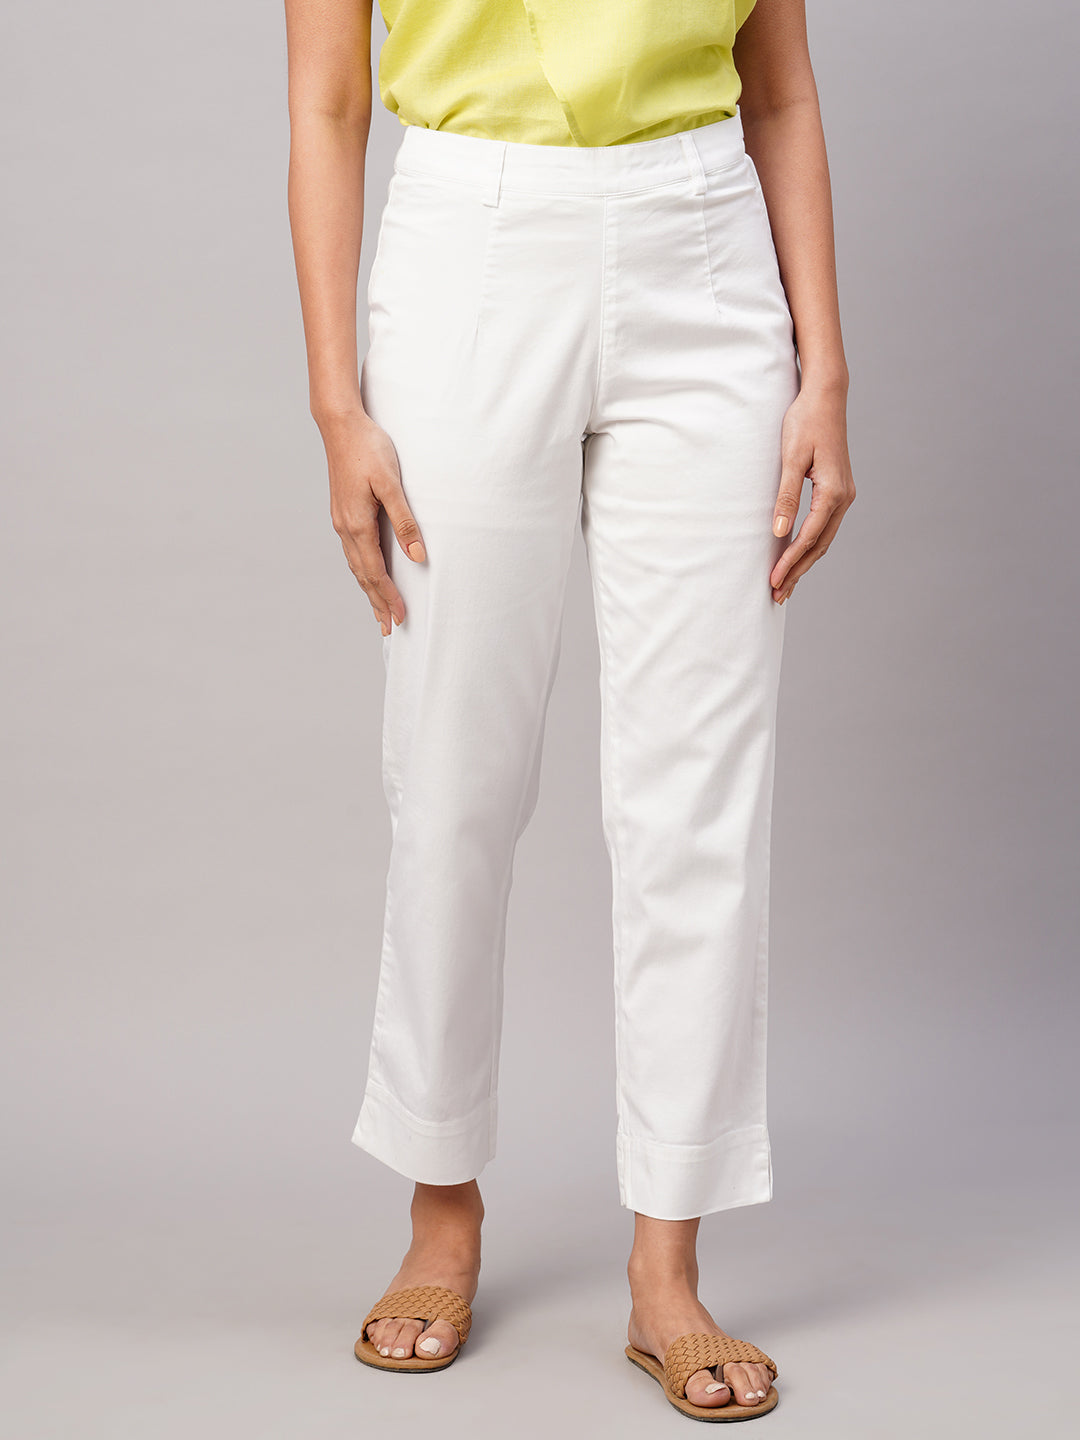 Buy COTTONWORLD White Solid Regular Fit Linen Womens Semi Formal Pants